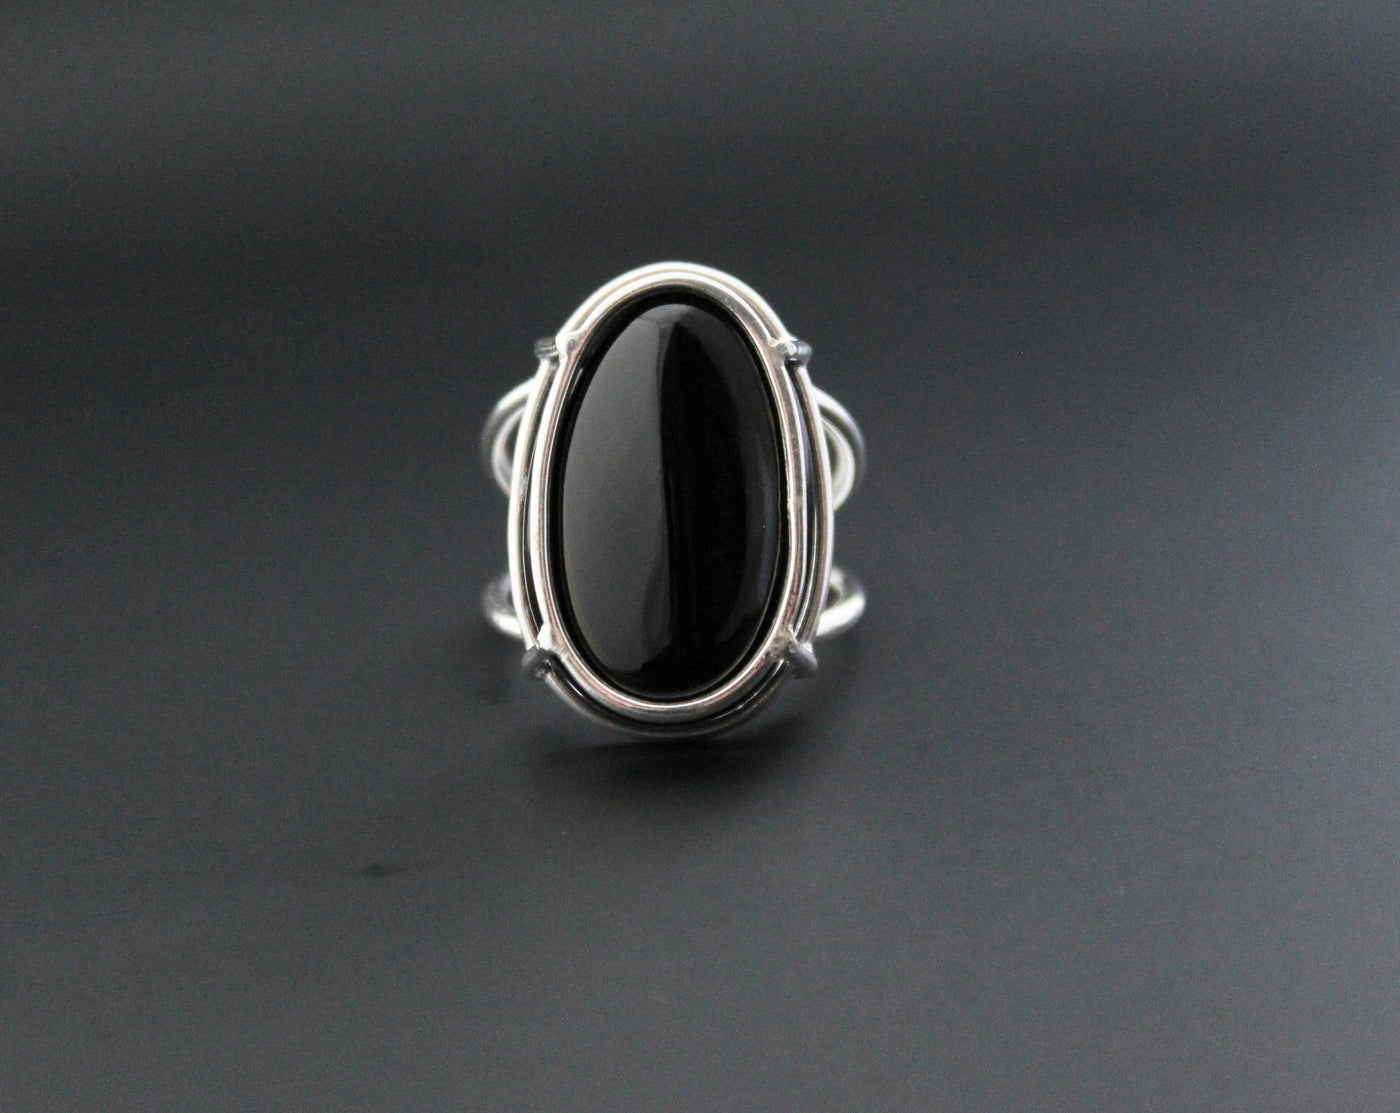 Natural Black Onyx Ring, Handmade Silver Ring, December Birthstone, Promise Ring, 925 Sterling Silver Ring, Tumble Black Onyx Designer Ring